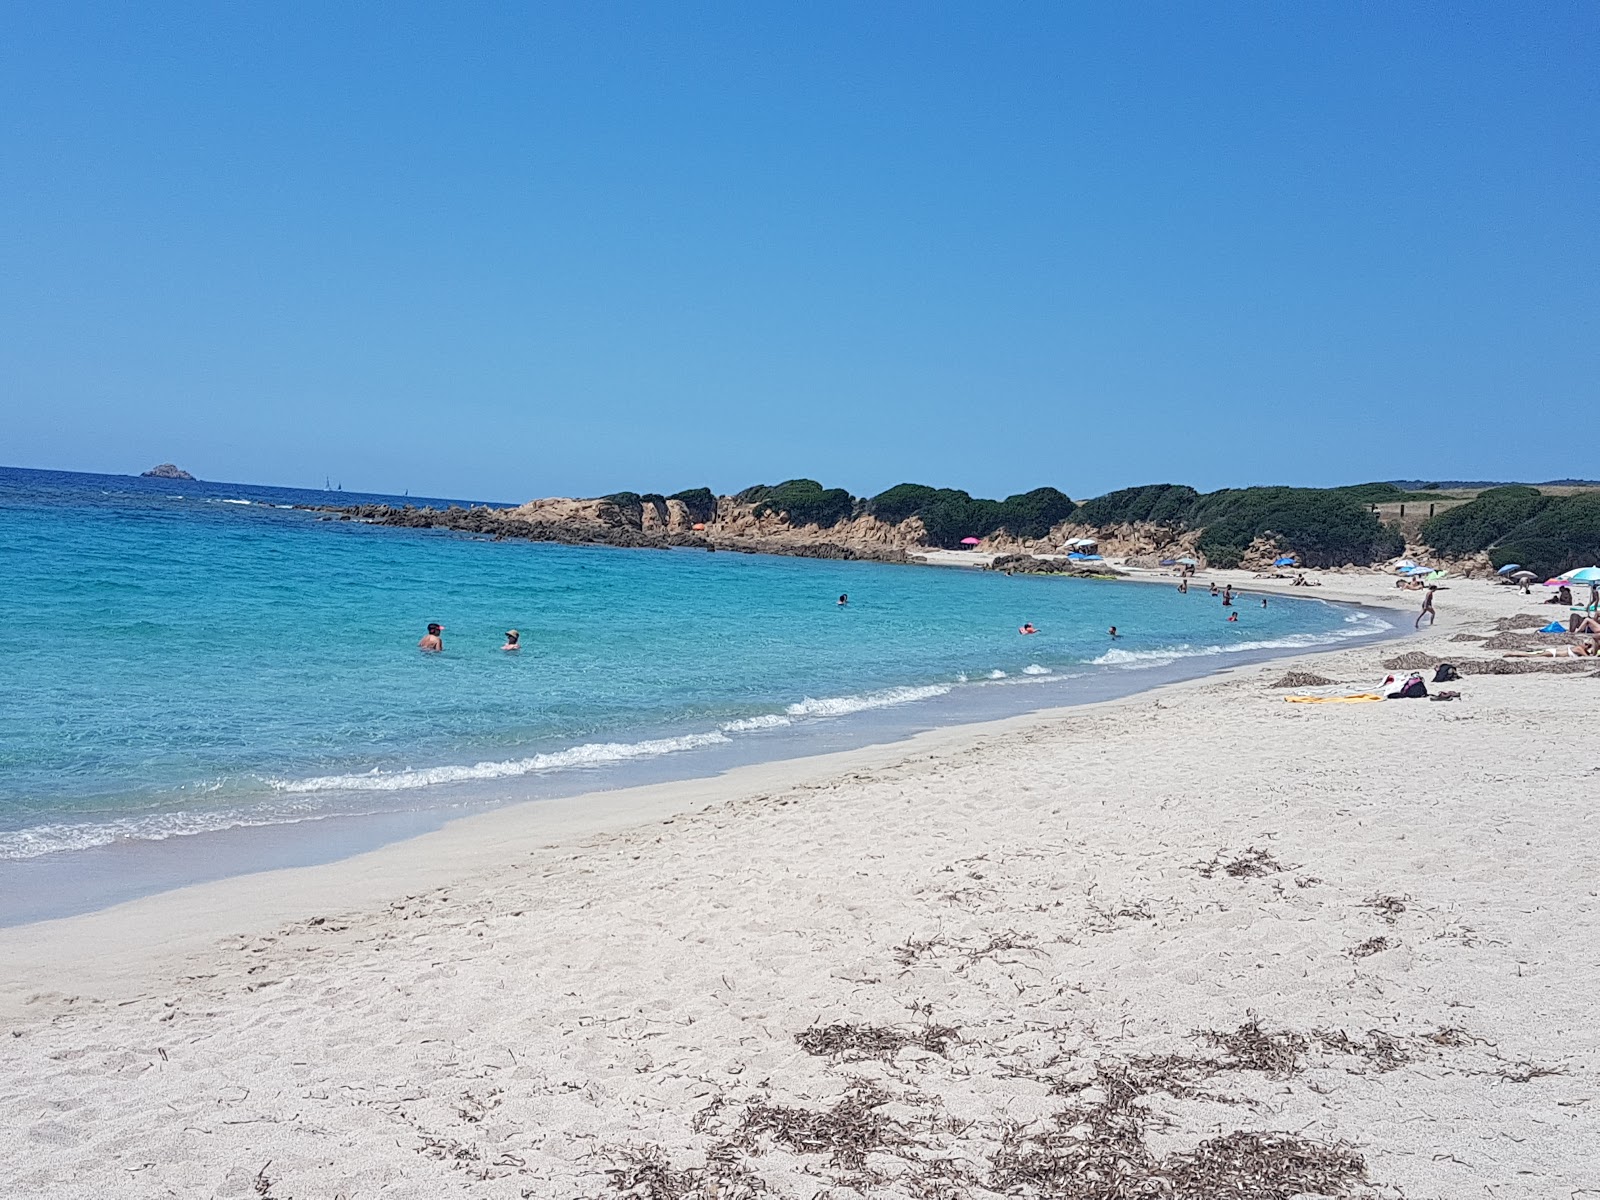 Foto de Saint-Antoine beach - lugar popular entre os apreciadores de relaxamento